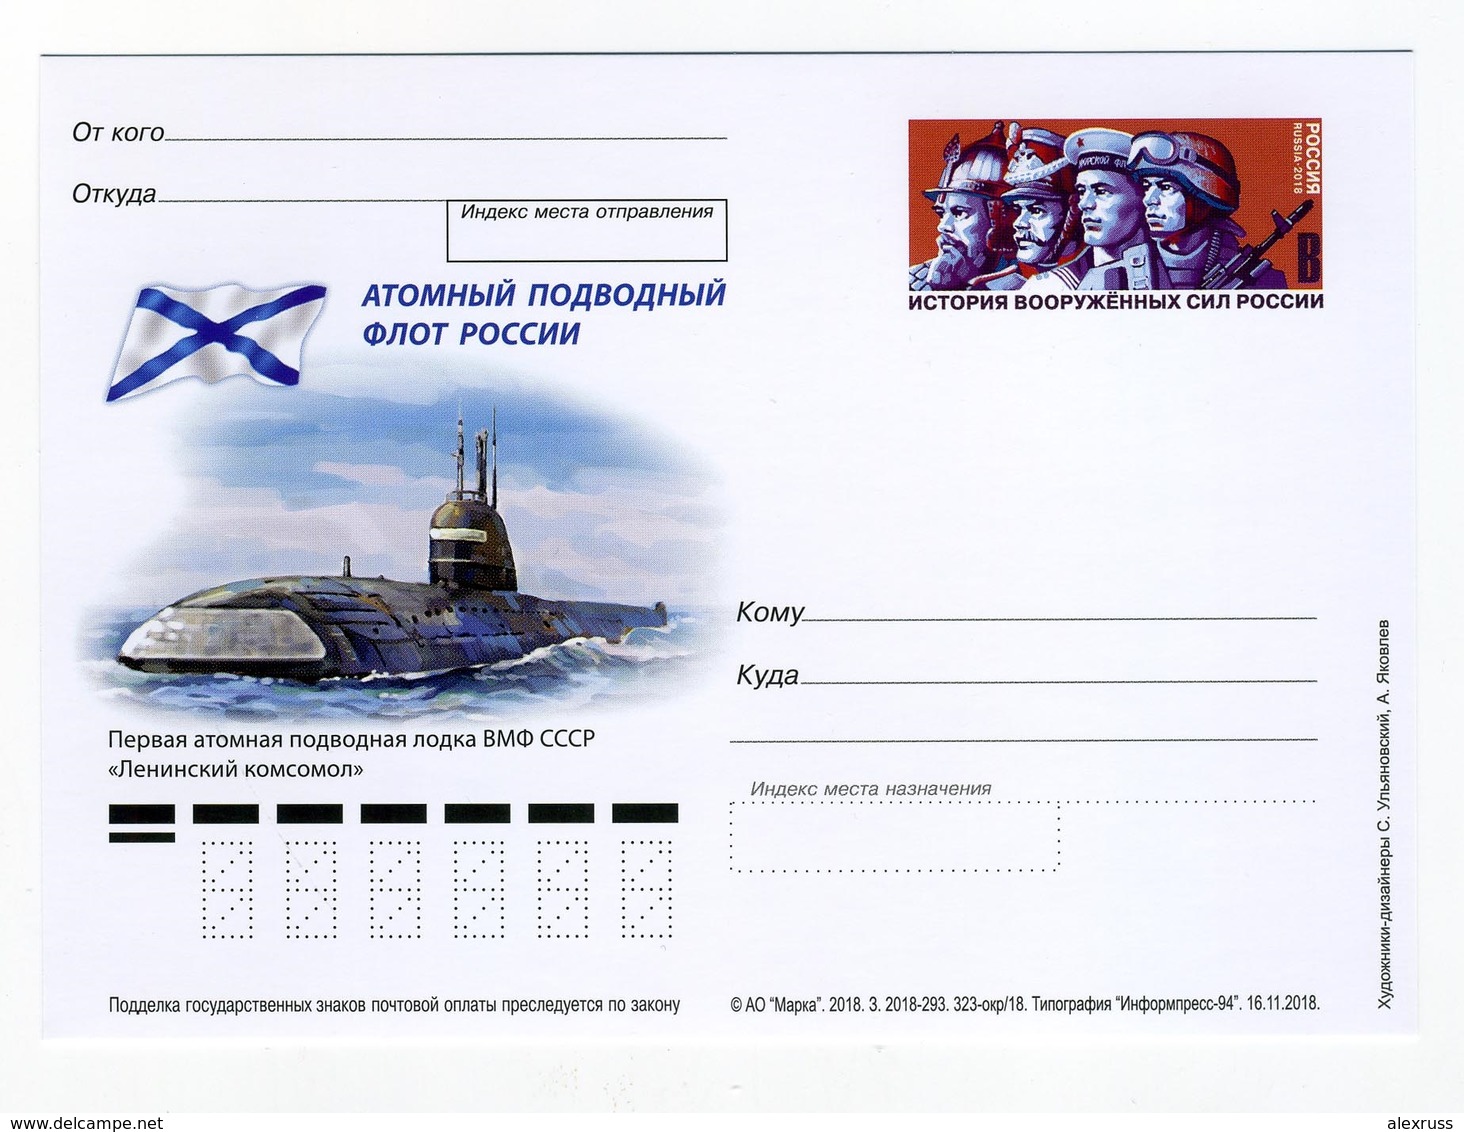 Russia 2018 Post Card, First Nuclear Submarine "Leninsky Komsomol" In The Fleet Of Soviet Union, # 323/окр,VF NEW !! - Onderzeeboten